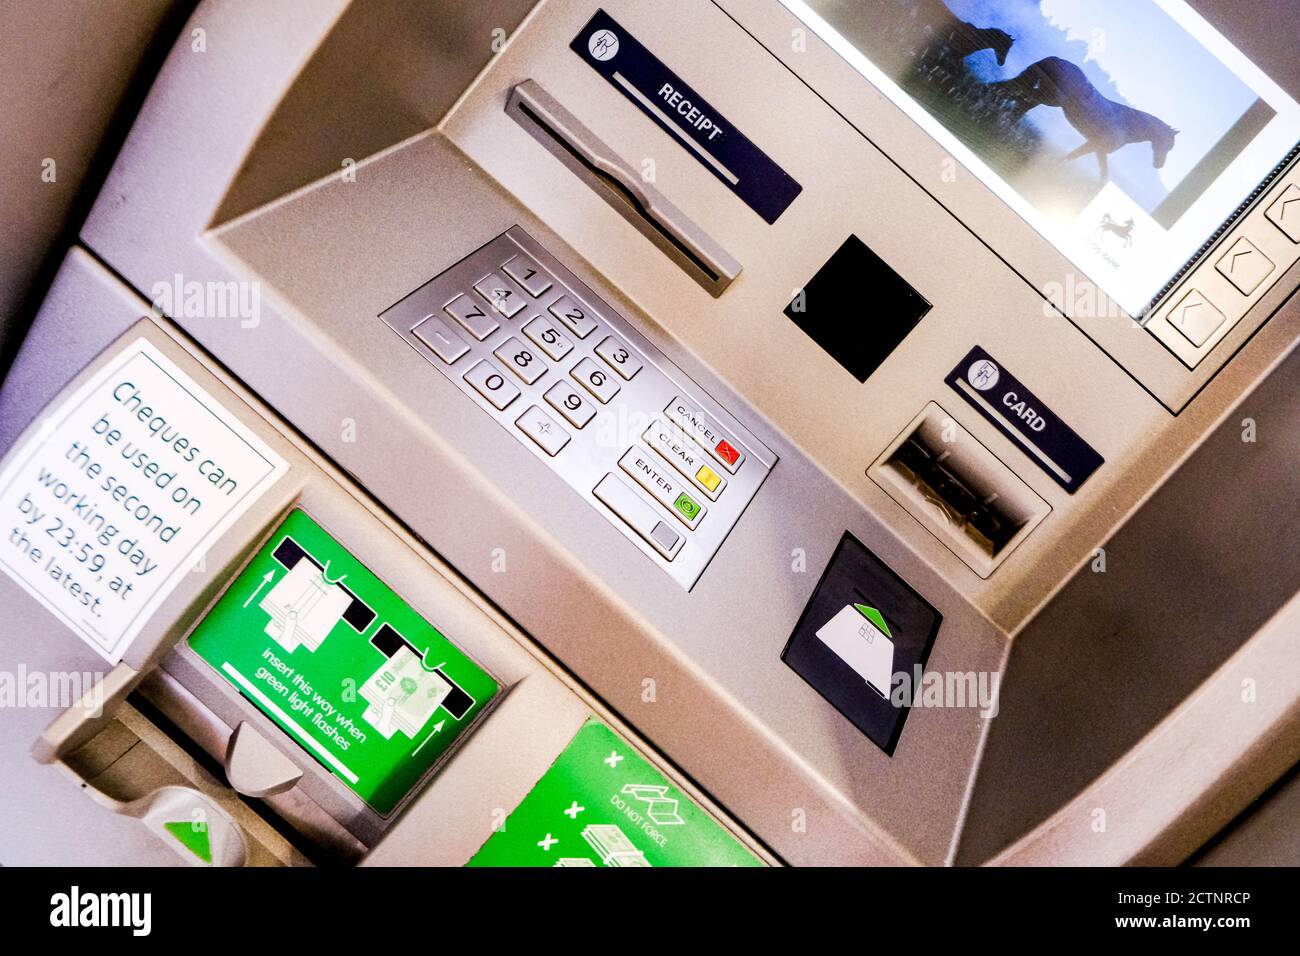 Londra UK, settembre 24 2002, Lloyds Bank Automated Cash and Check Deposit Machine Alow clienti per depositare denaro senza ritardi Foto Stock